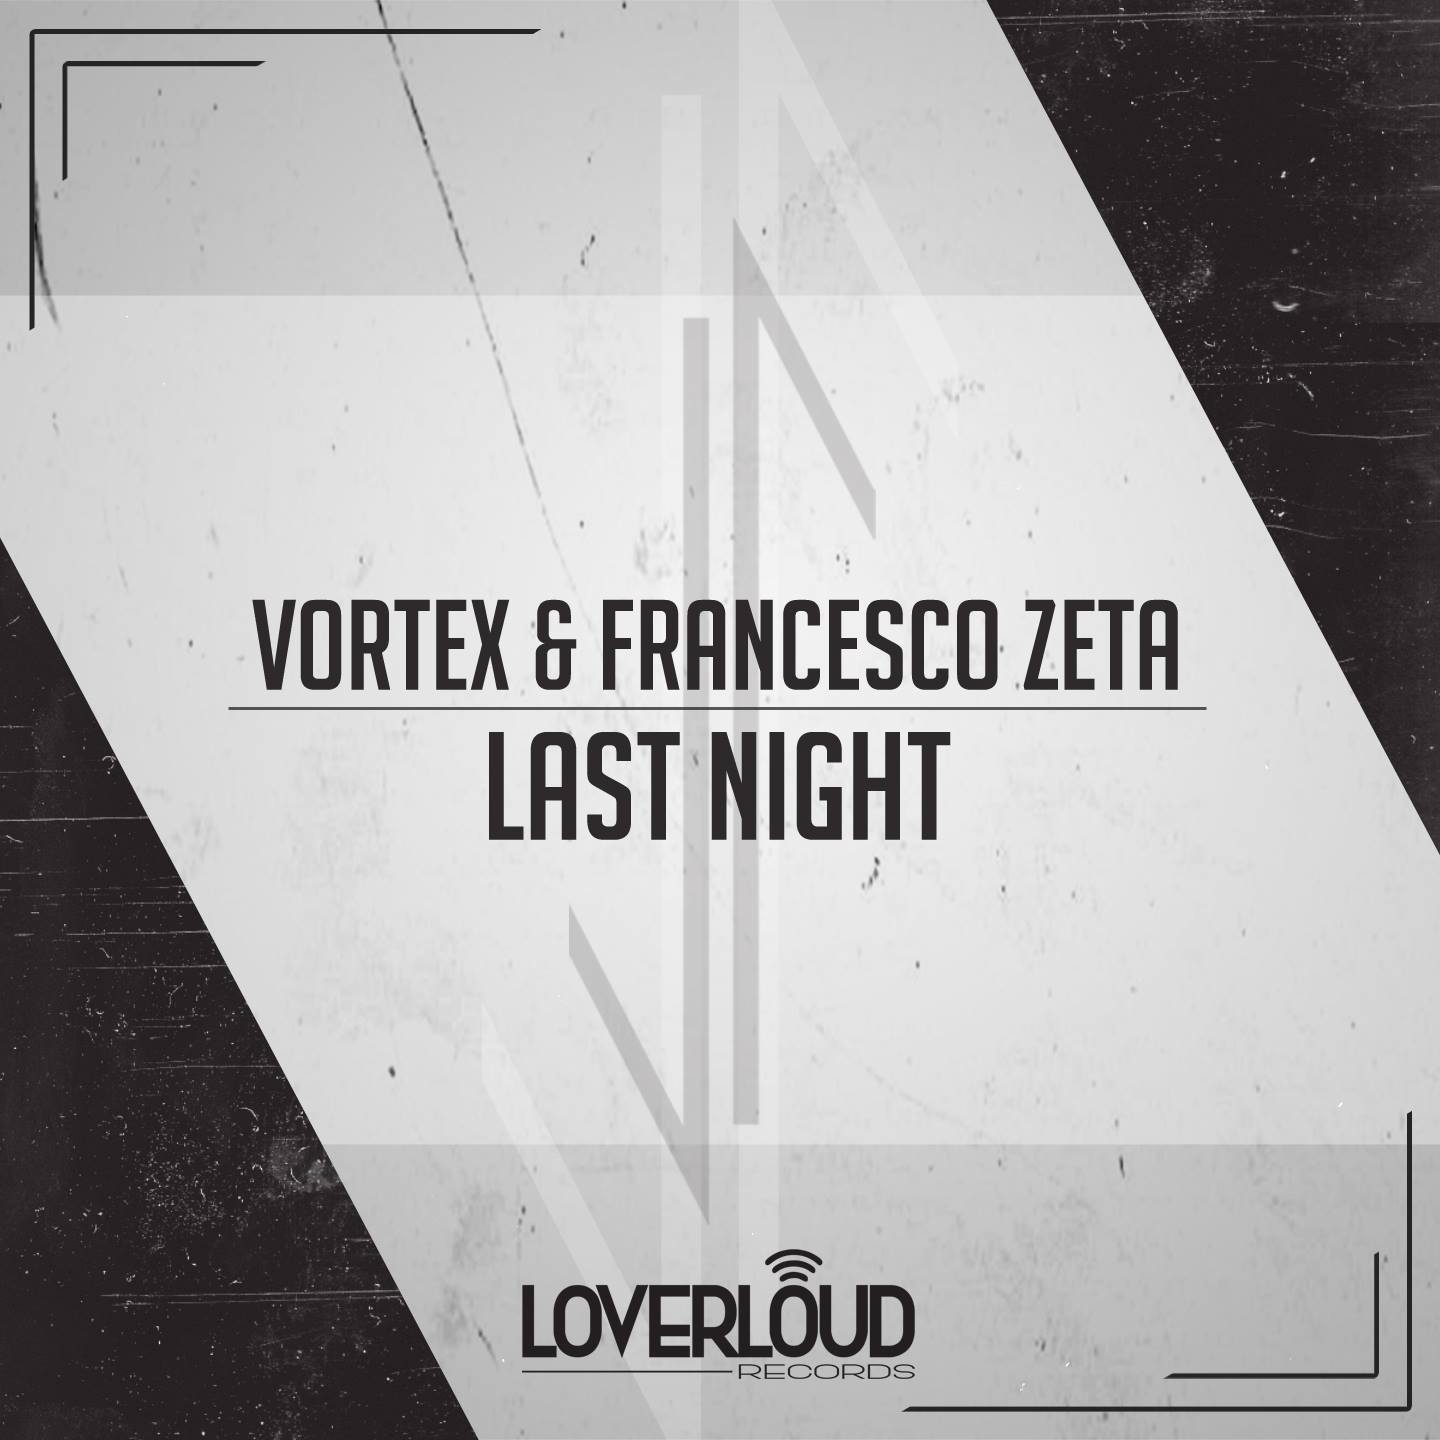 Vortex & Francesco Zeta - Last Night